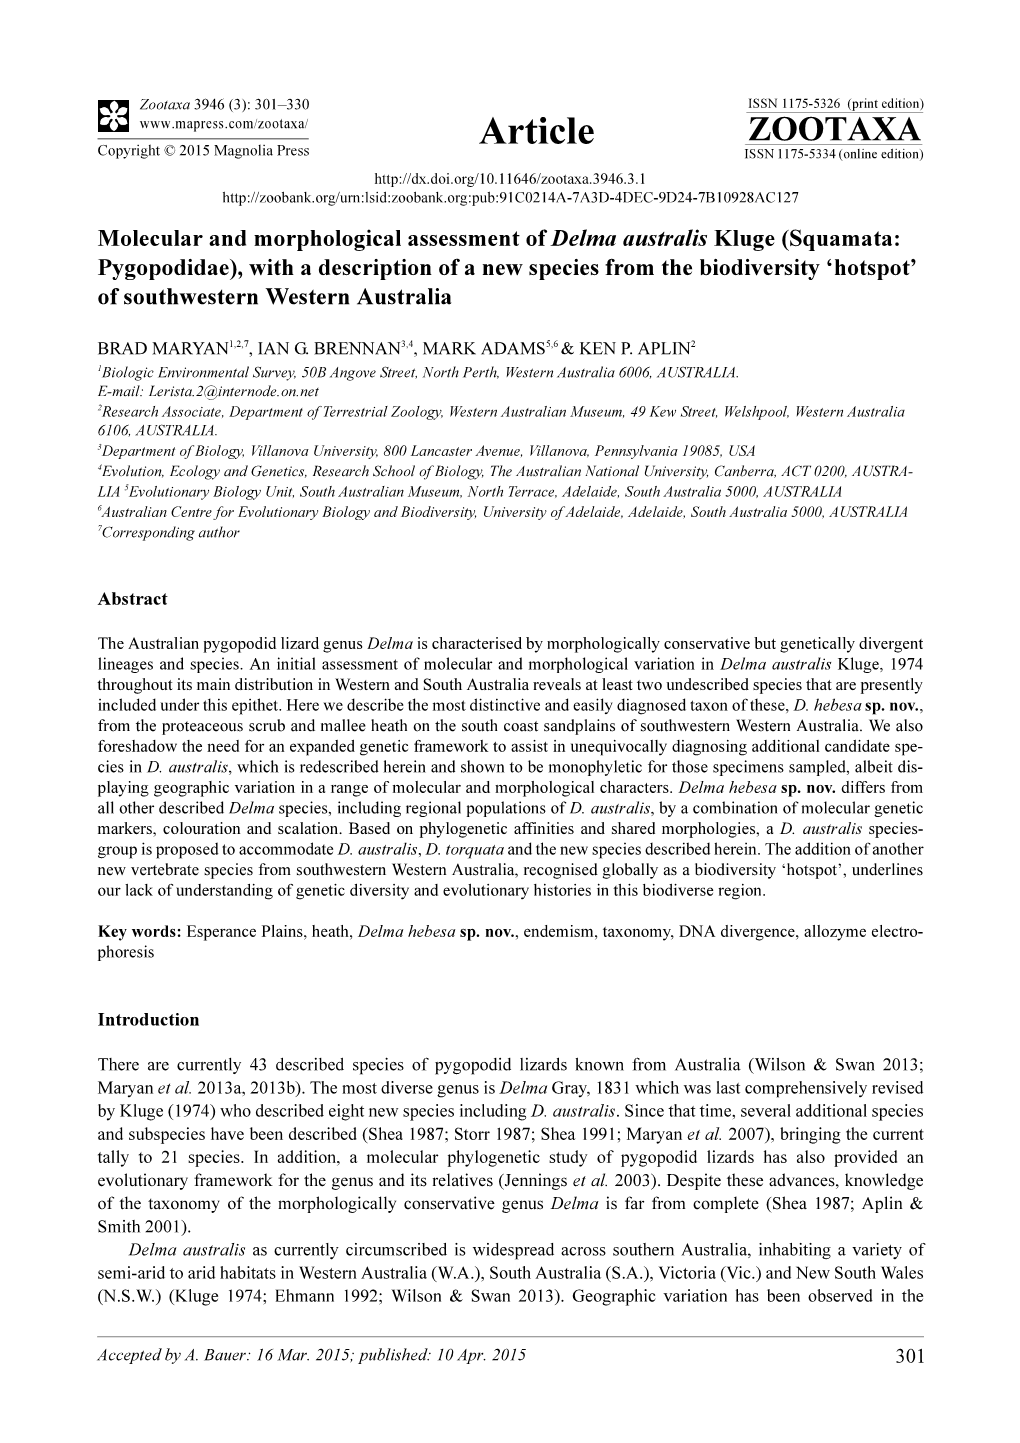 Molecular and Morphological Assessment of Delma Australis Kluge